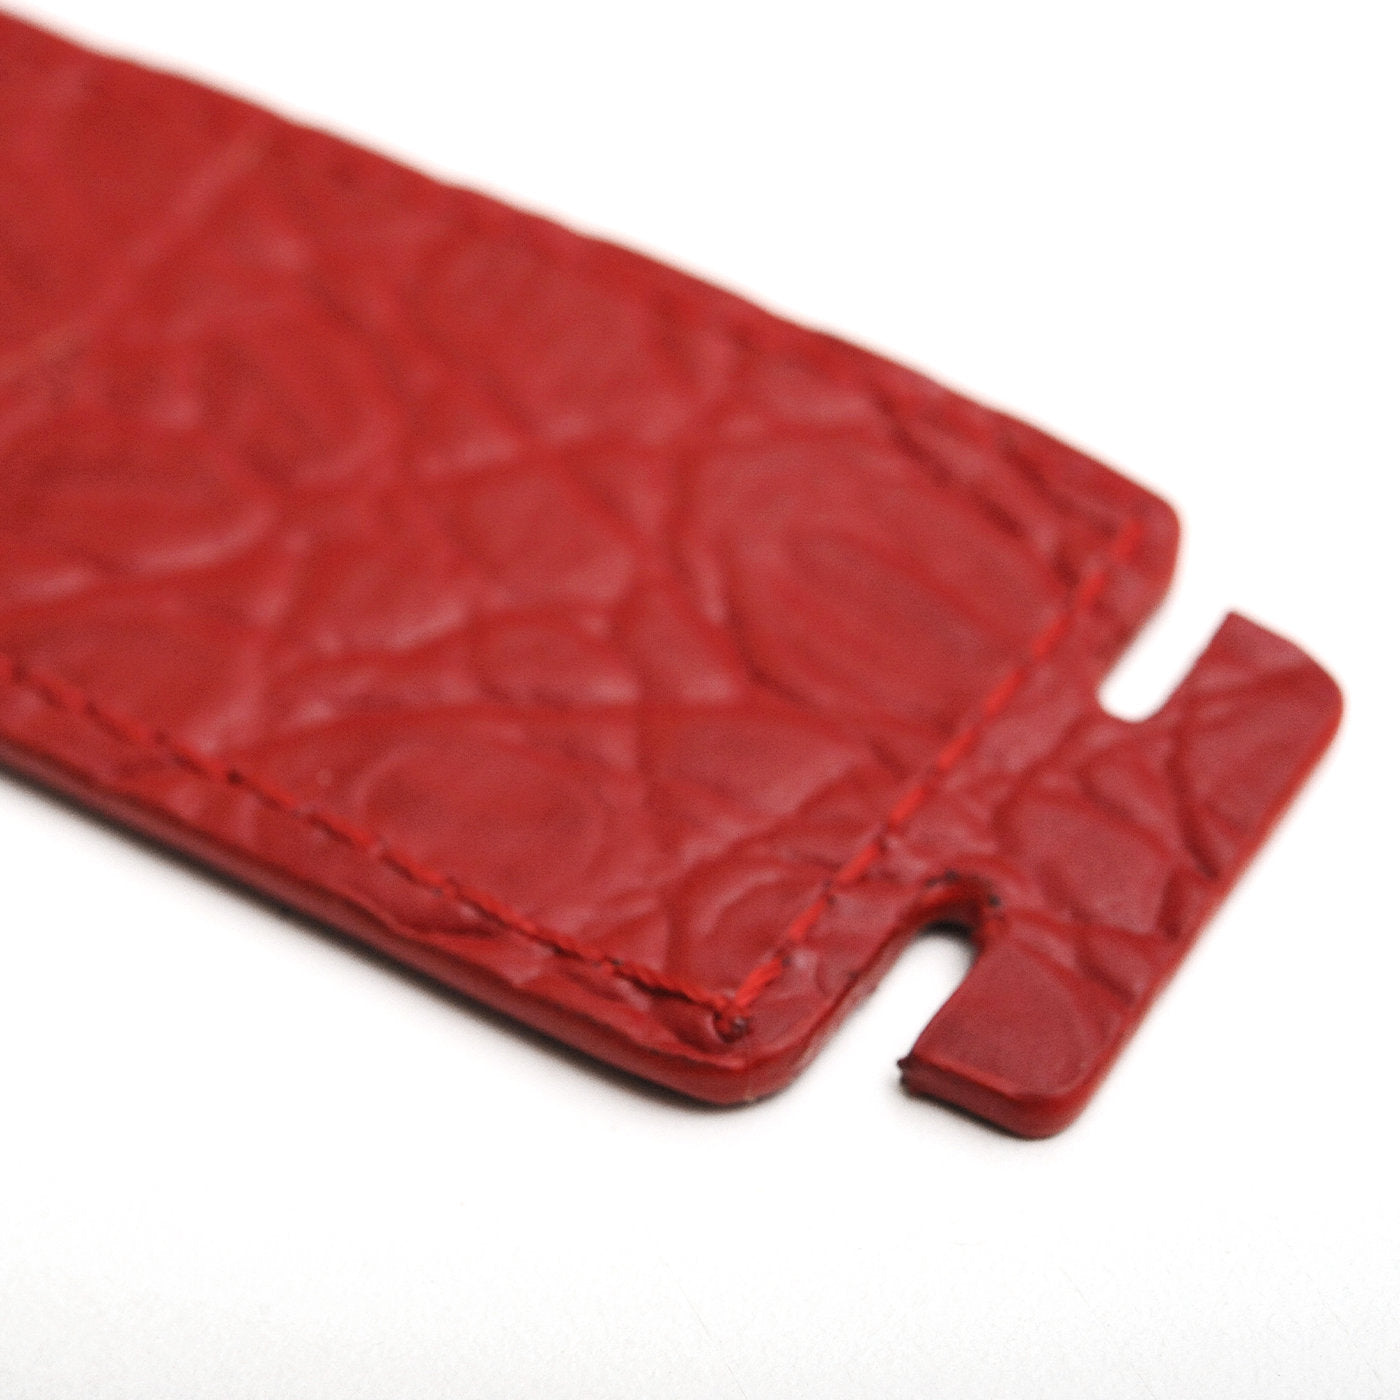 Kenya Medium Set of 2 Rectangular Red Leather Placemats - Alternative view 2